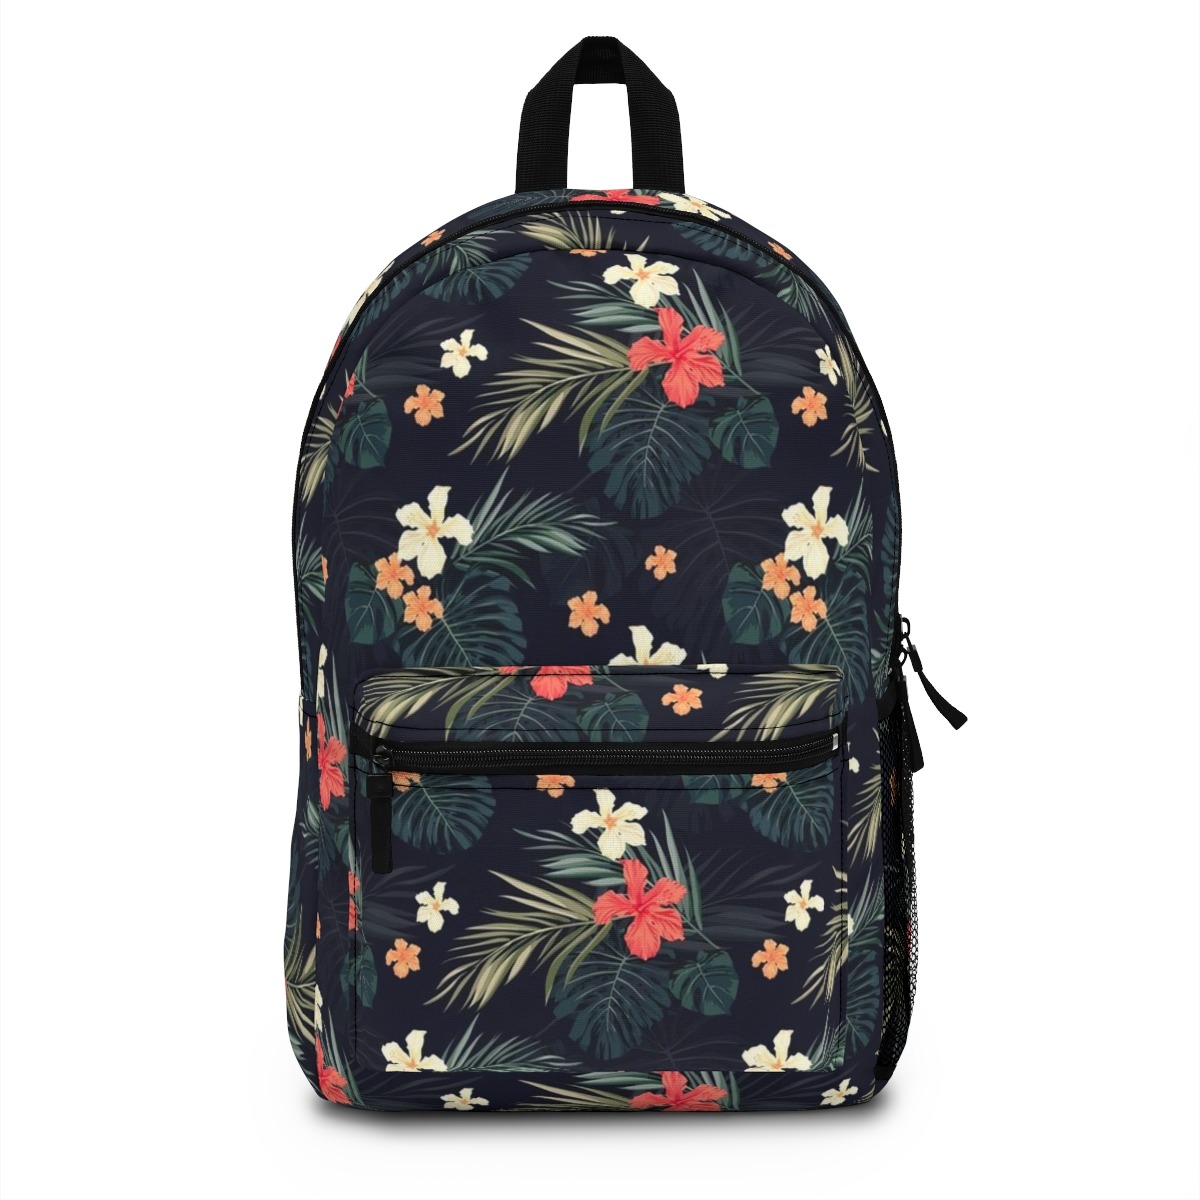 SM New York | Bags | Sm New York Black Floral Backpack | Poshmark